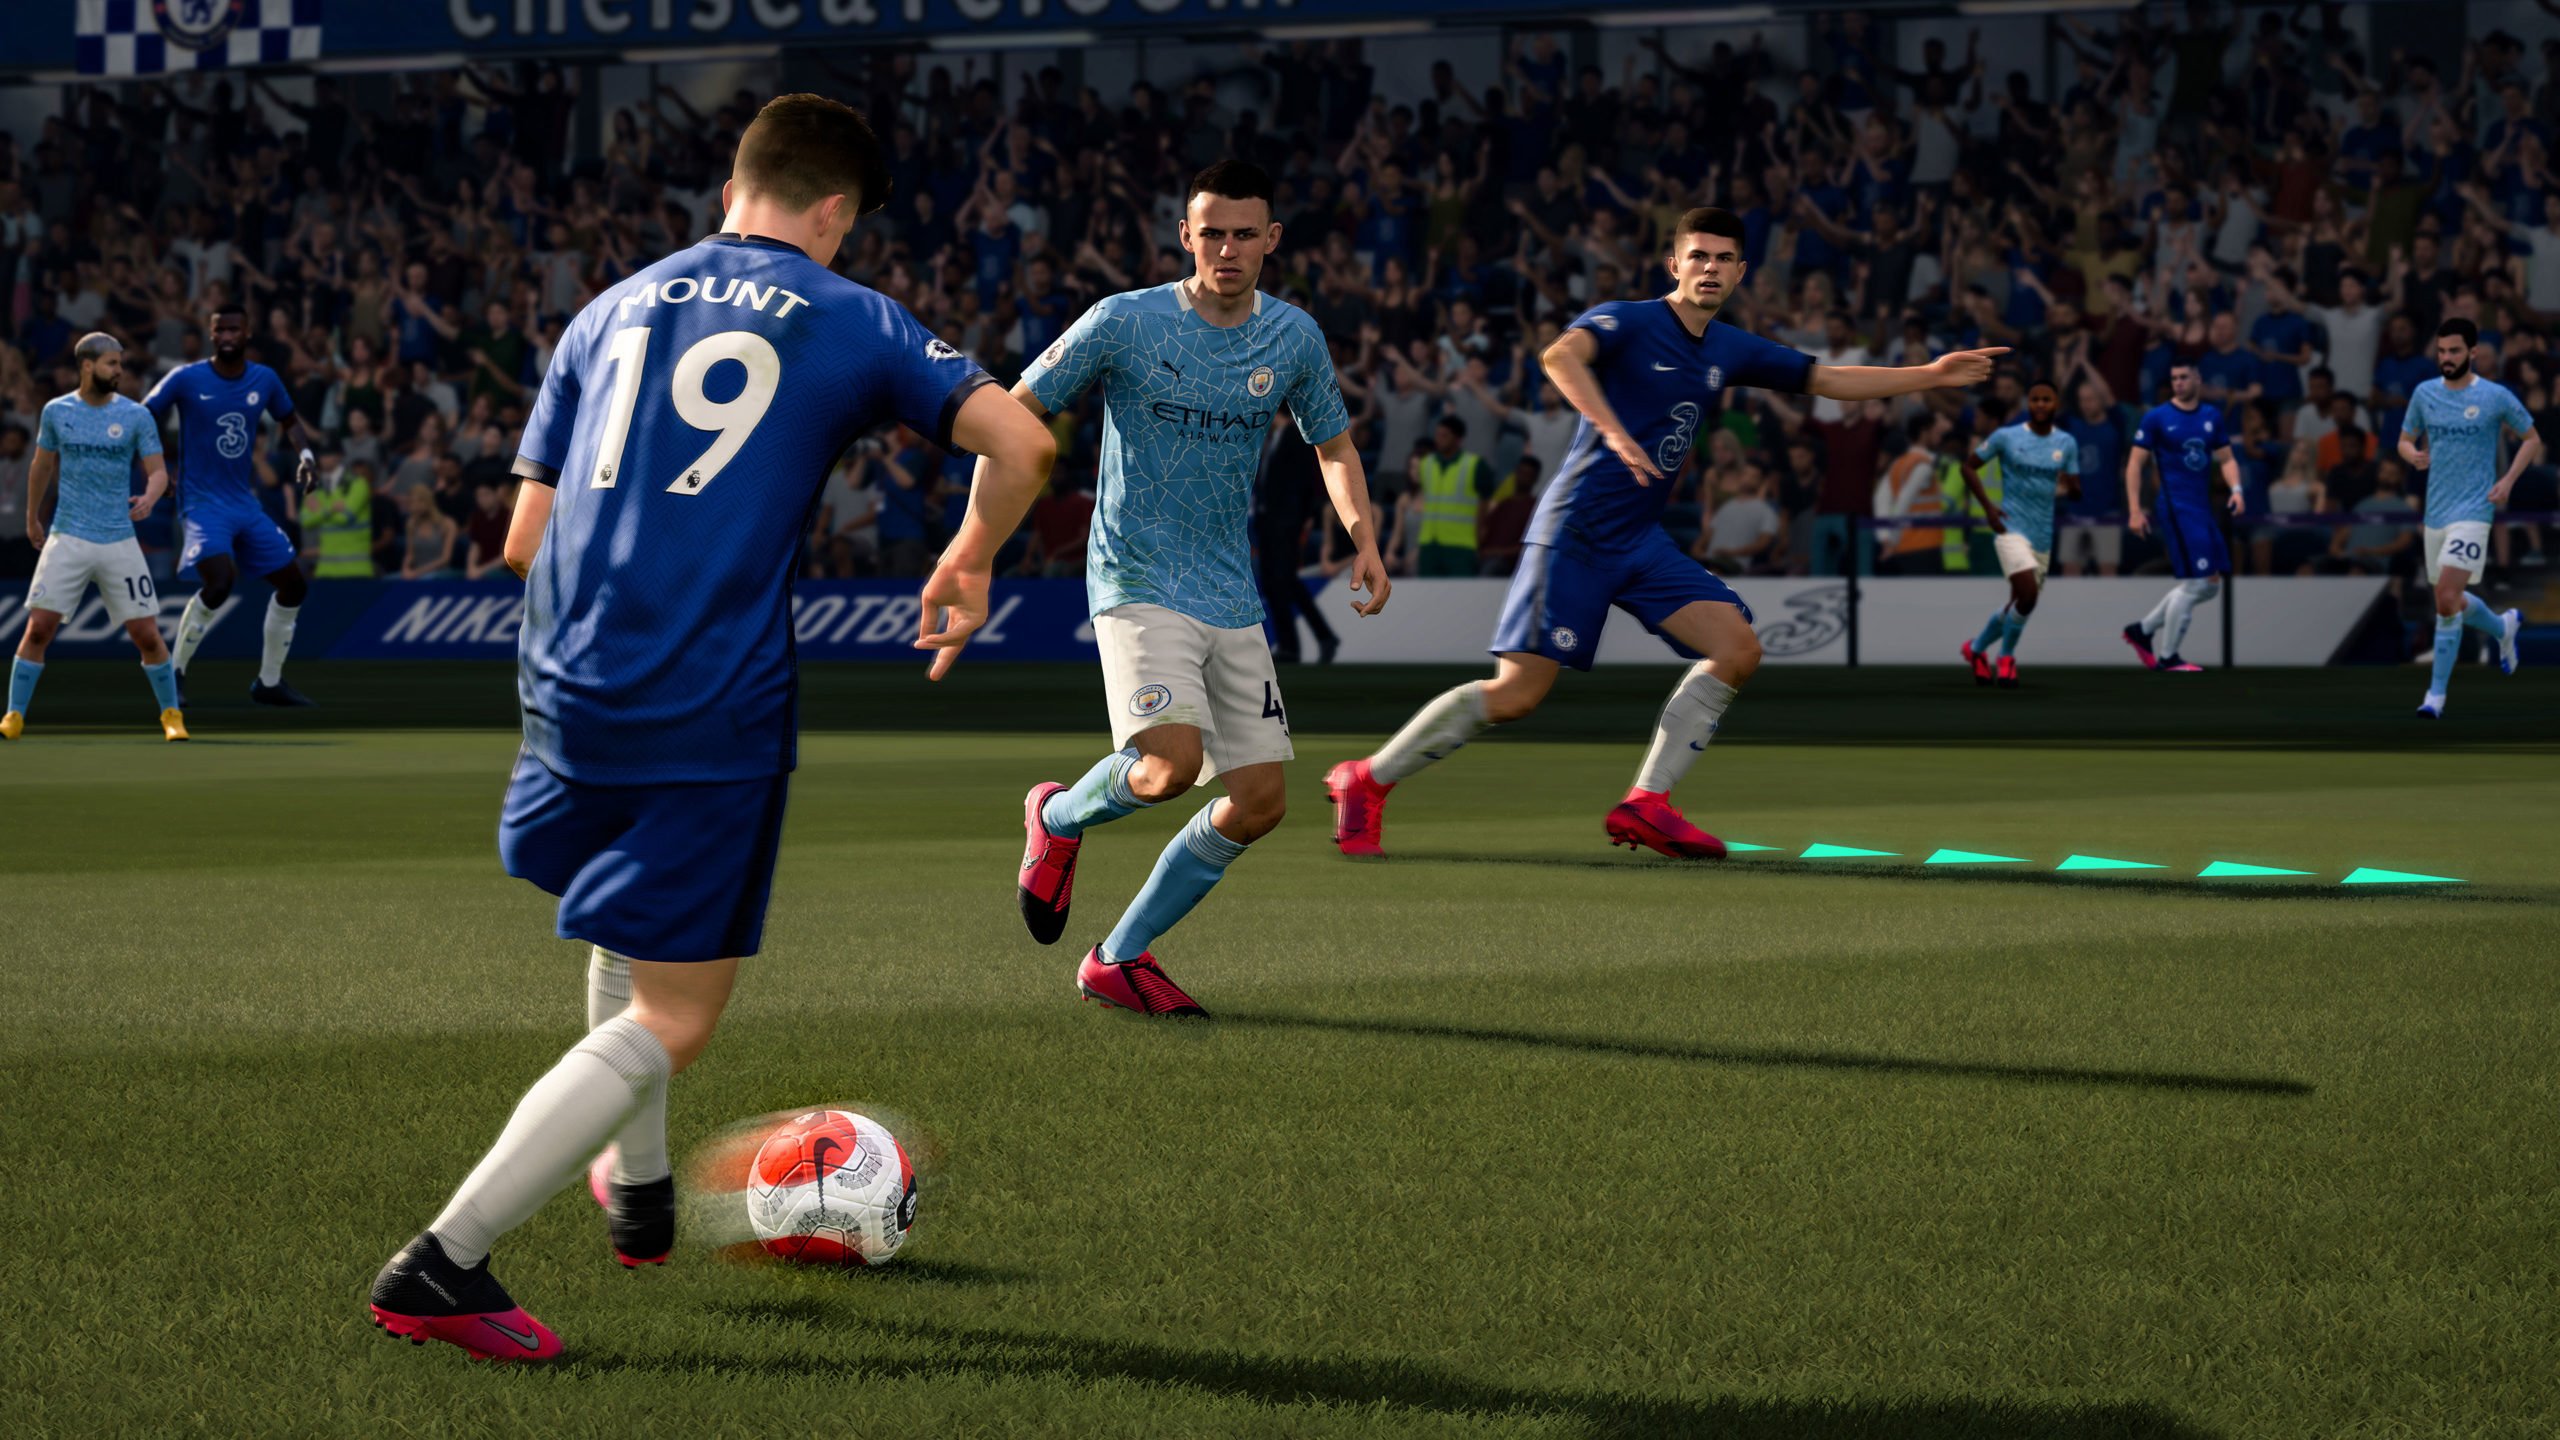 FIFA 21 gameplay trailer showcases creative runs, new dribbling and